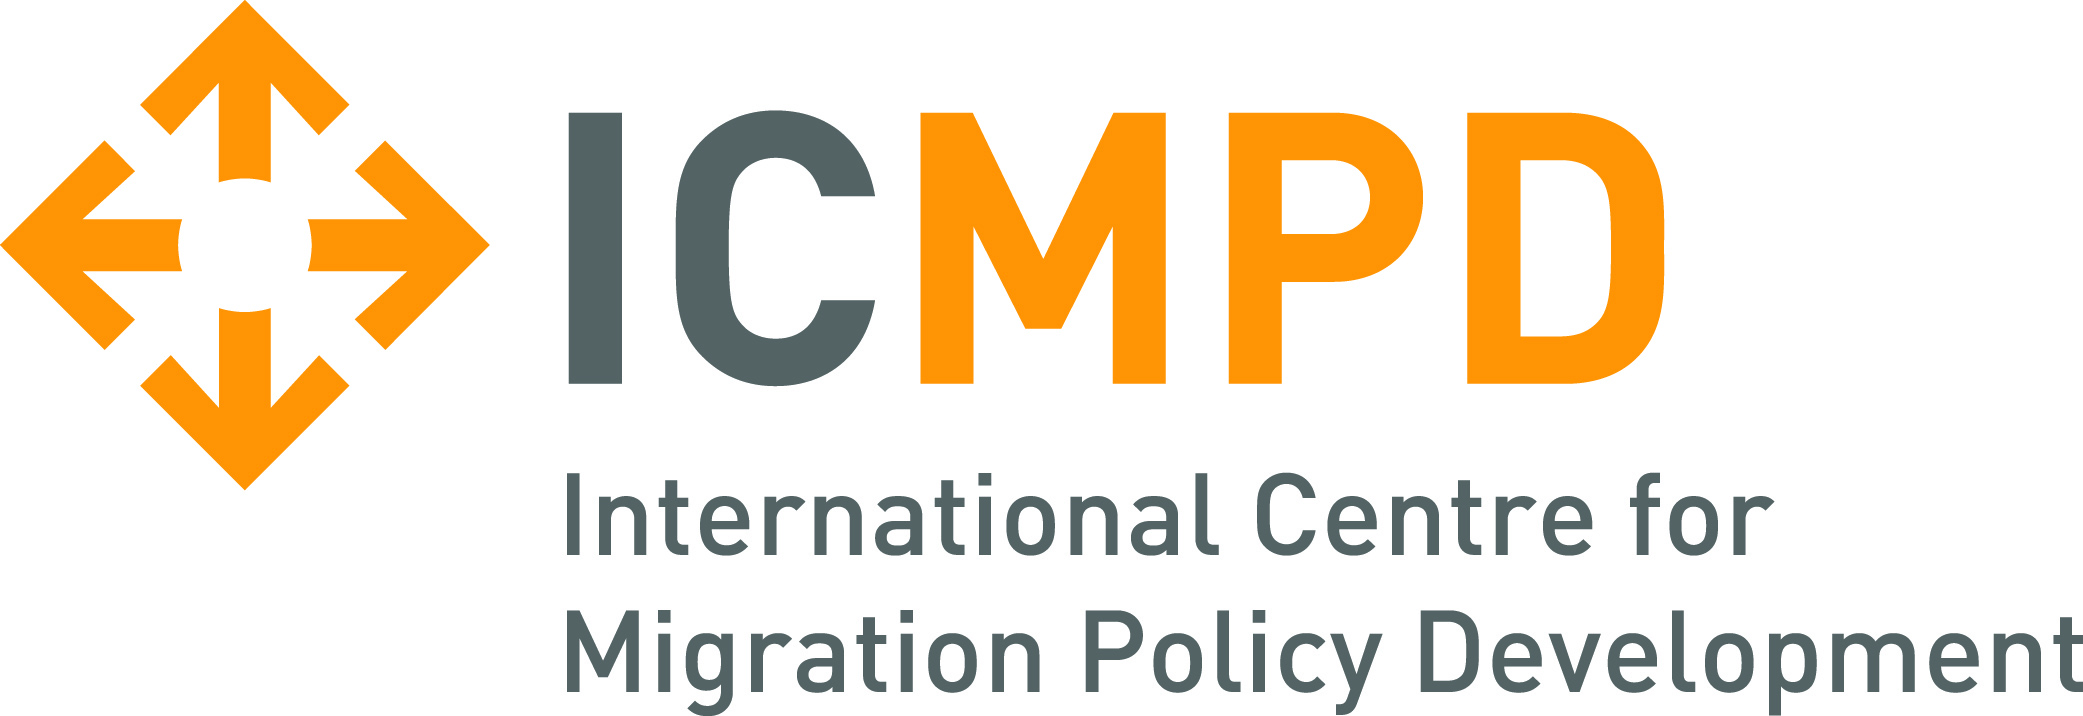 ICMPD - International Migration Policy Development